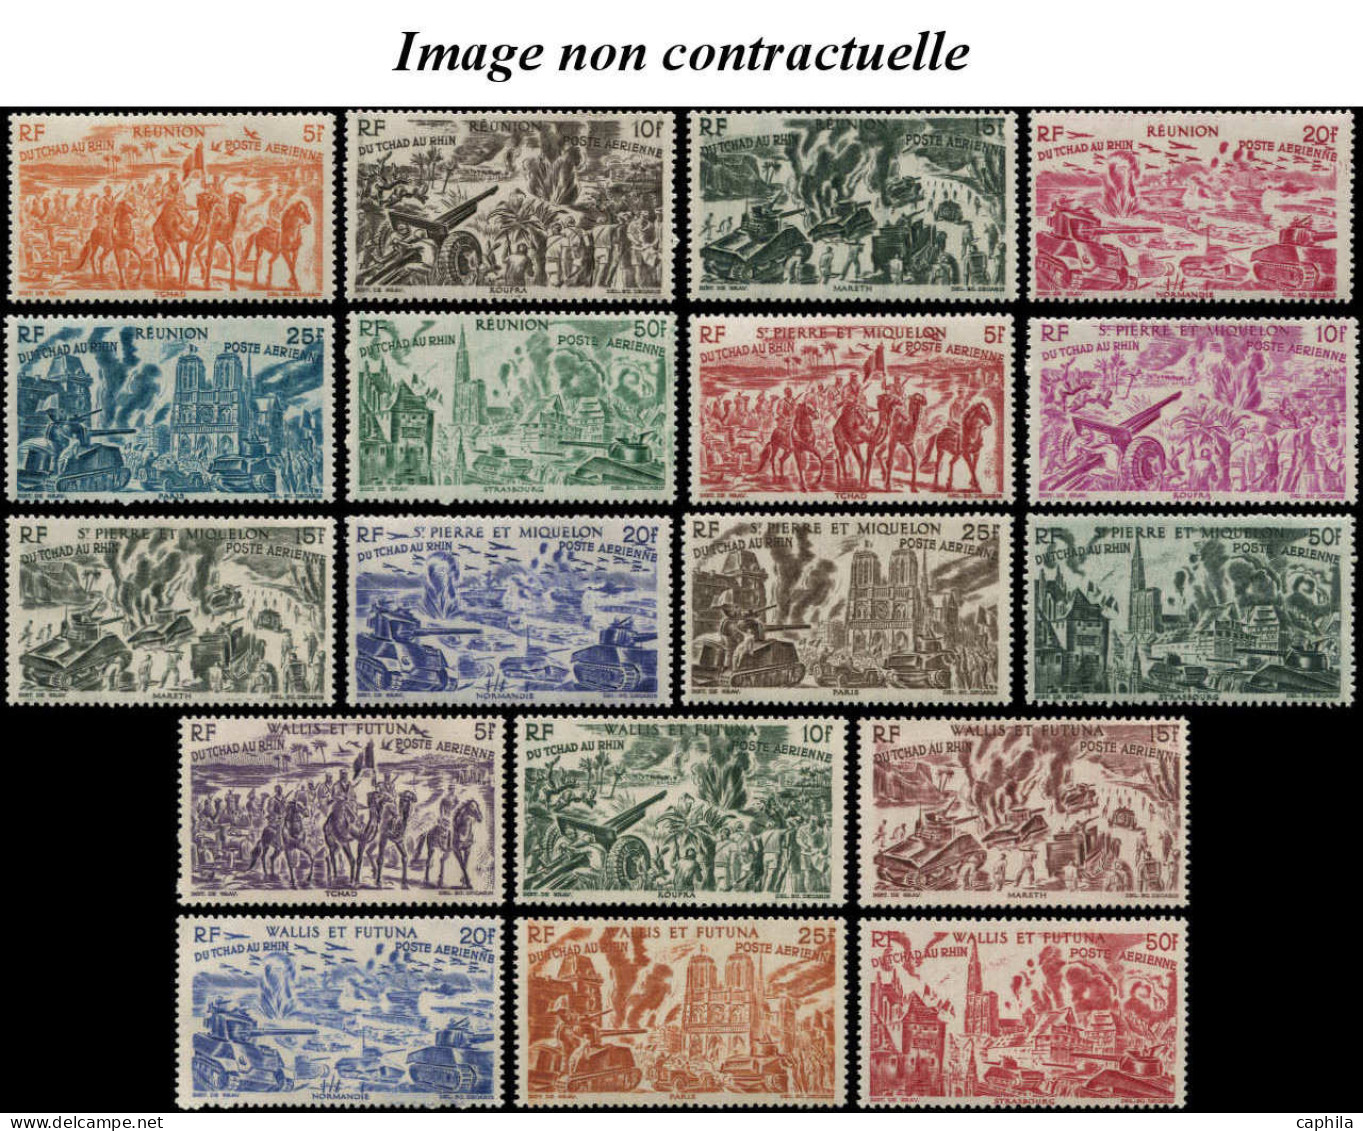 - COLONIES SERIES PA, 1946, XX, Tchad au Rhin, complet 90 valeurs - Cote : 274 €